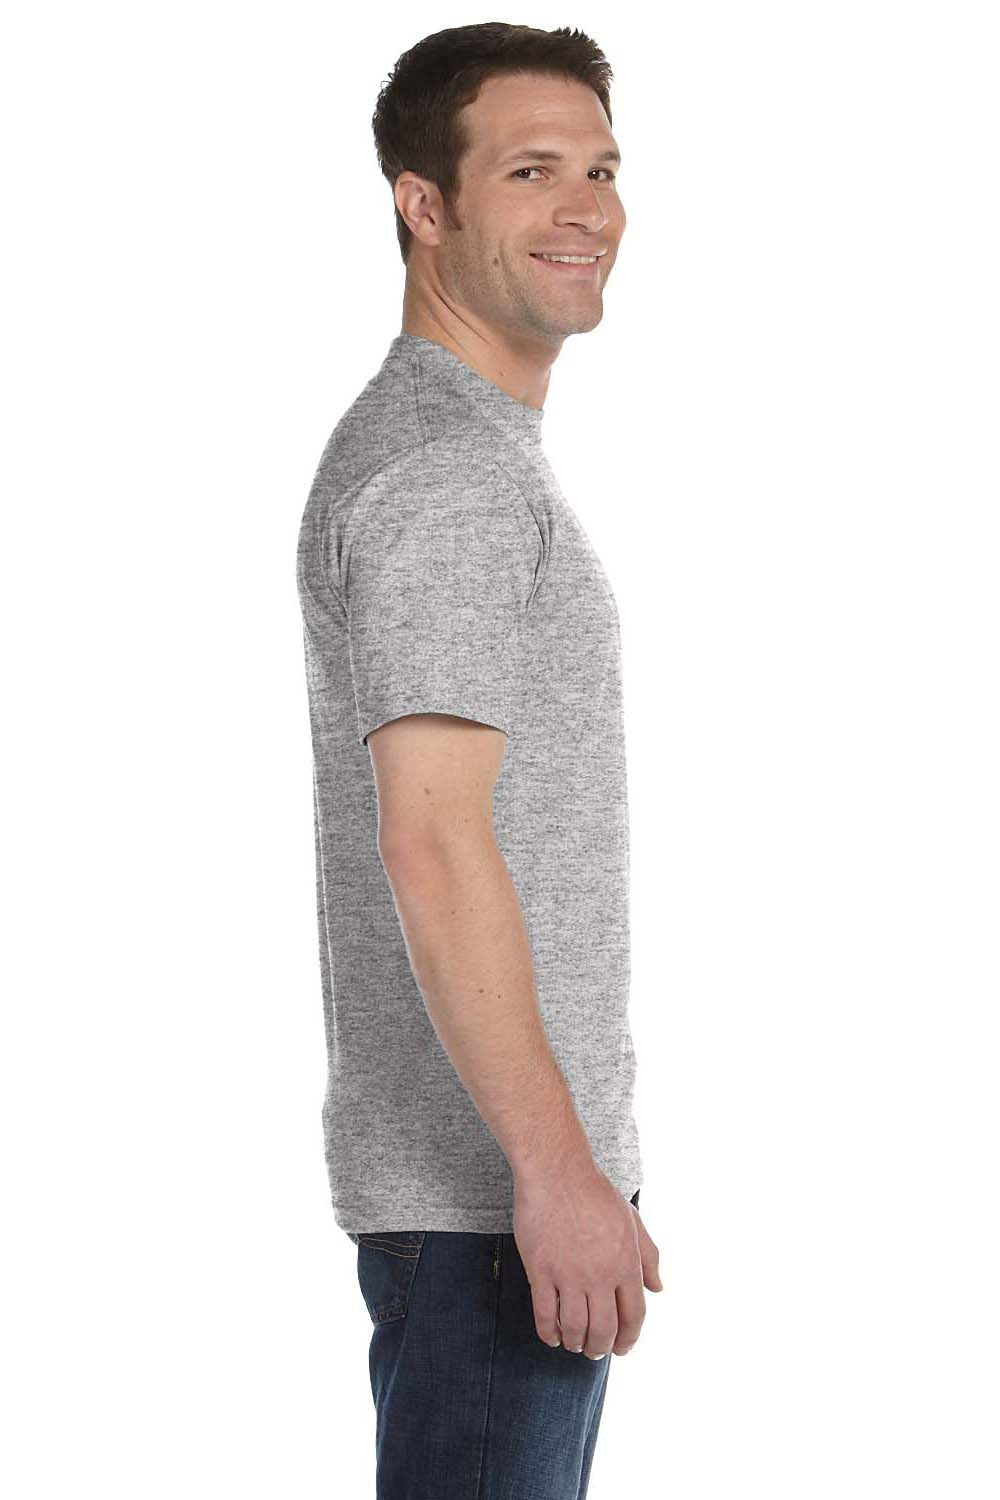 Hanes 5280 Mens ComfortSoft Short Sleeve Crewneck T-Shirt Light Steel Grey Side